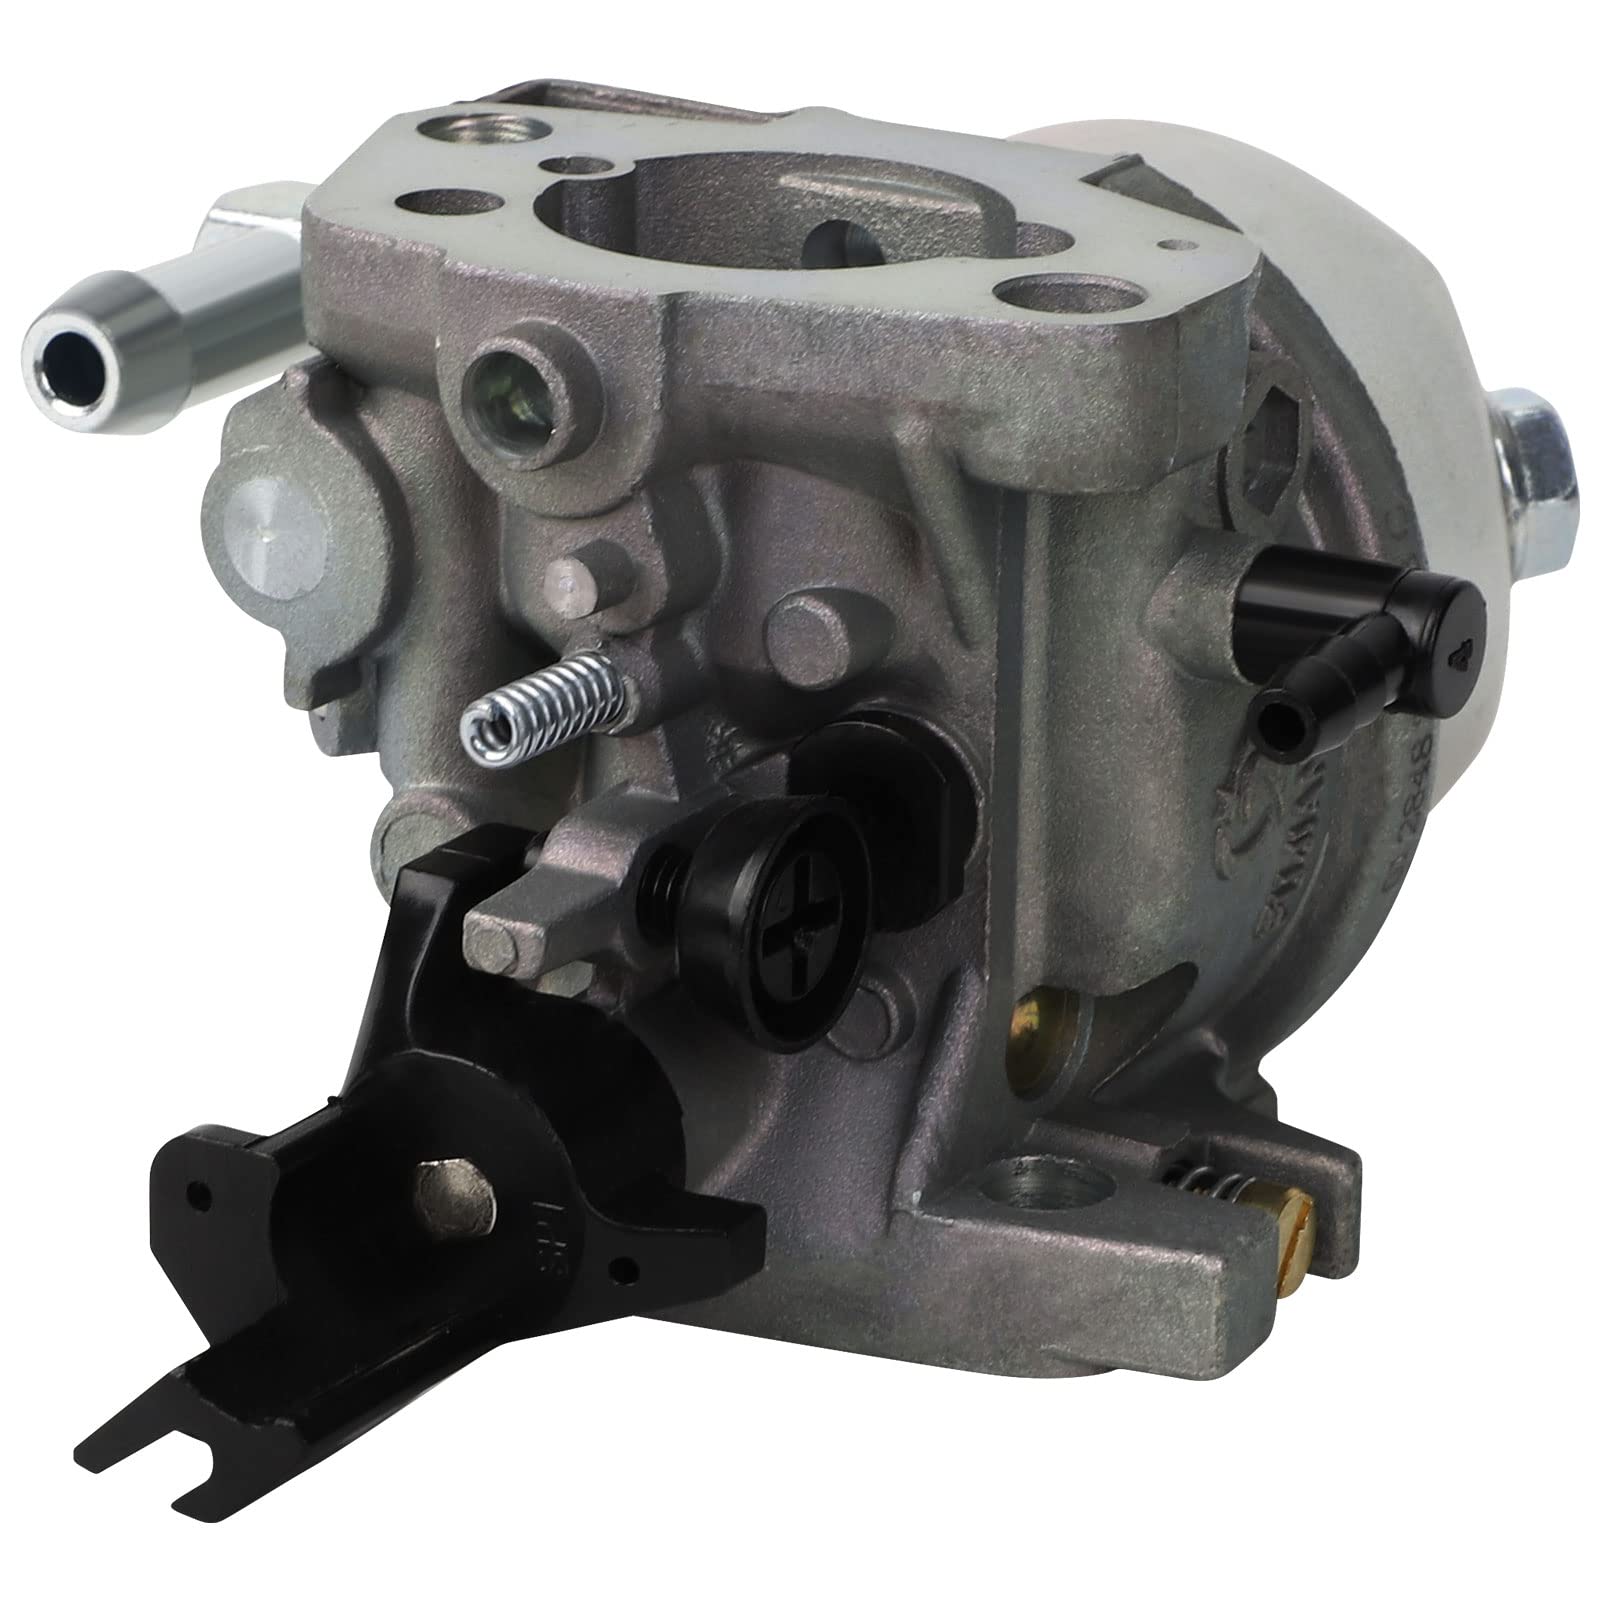 HUSWELL 595785 Snowblower Carburetor for Briggs & Stratton 591154 592447 595785 Carburetor Snow Thrower Engine w Fuel Filter Primer Bulb